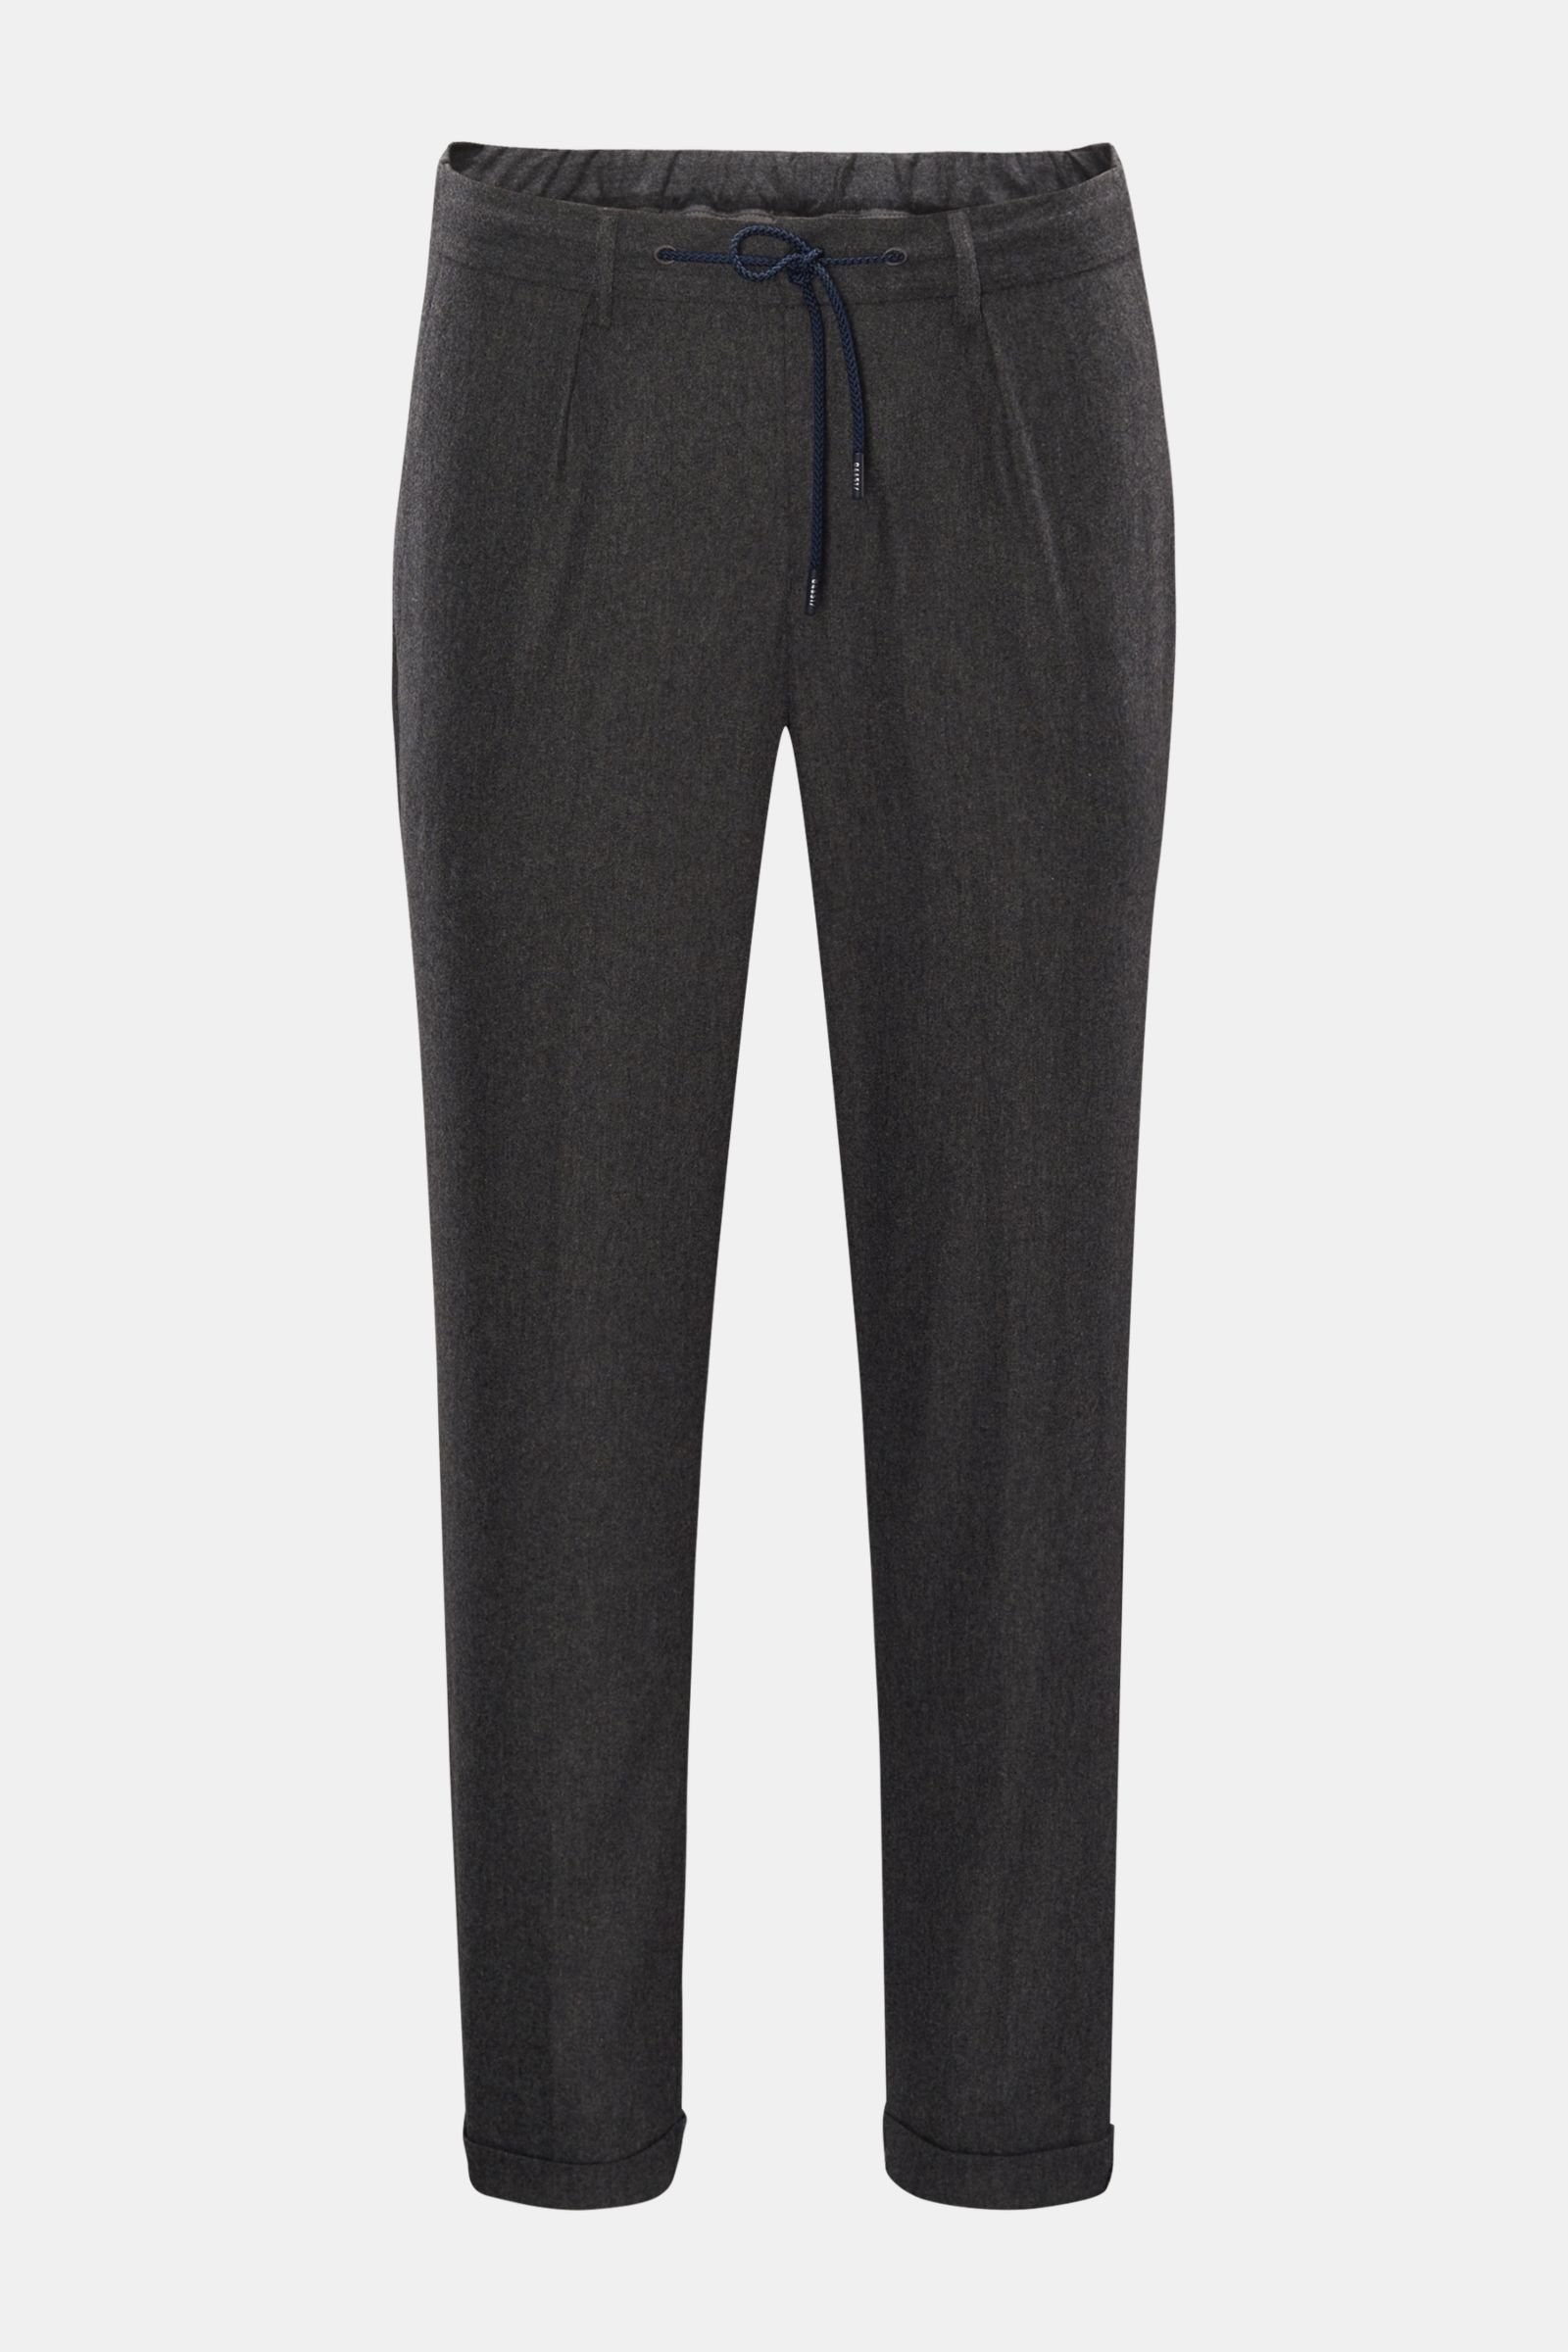 Flannel jogger pants dark grey 